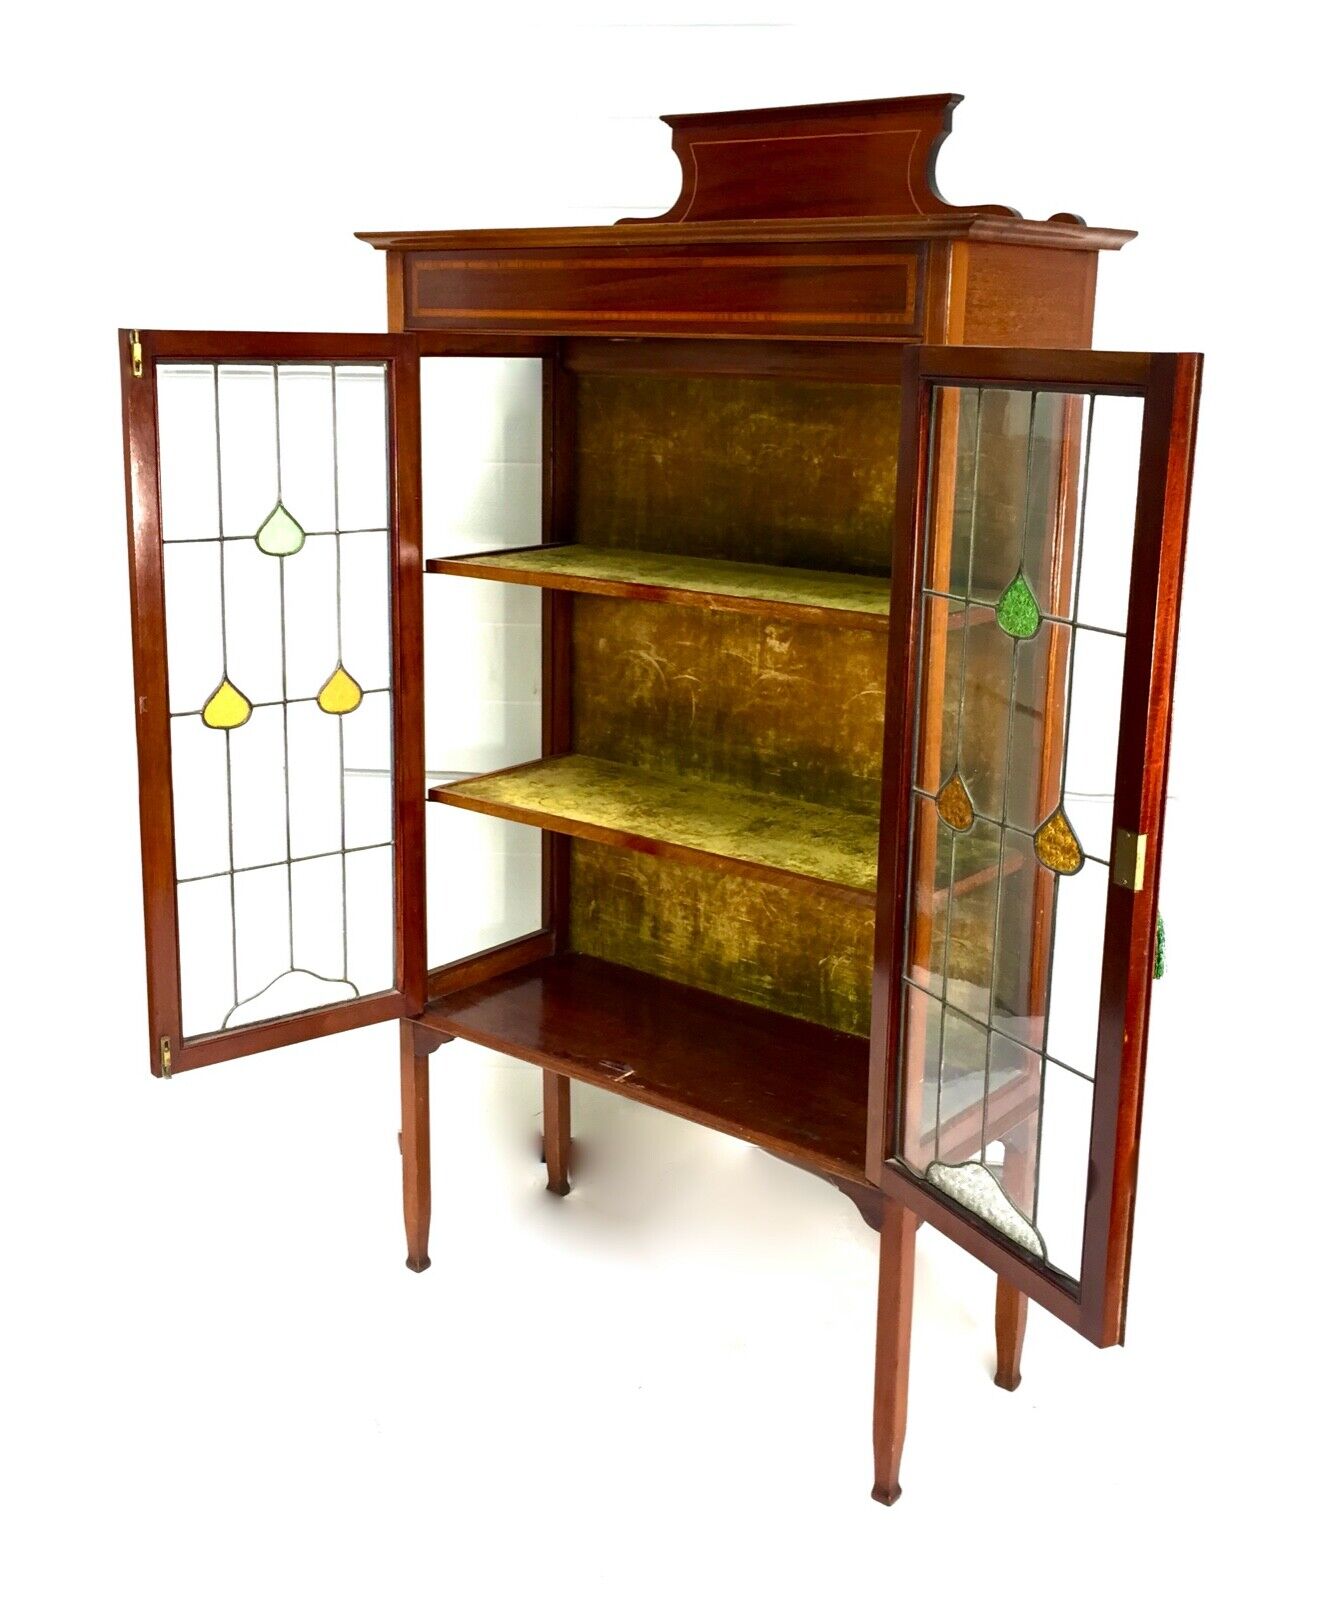 Antique Edwardian Mahogany & Stained Lead Glazed Display Cabinet Bookcase c.1900